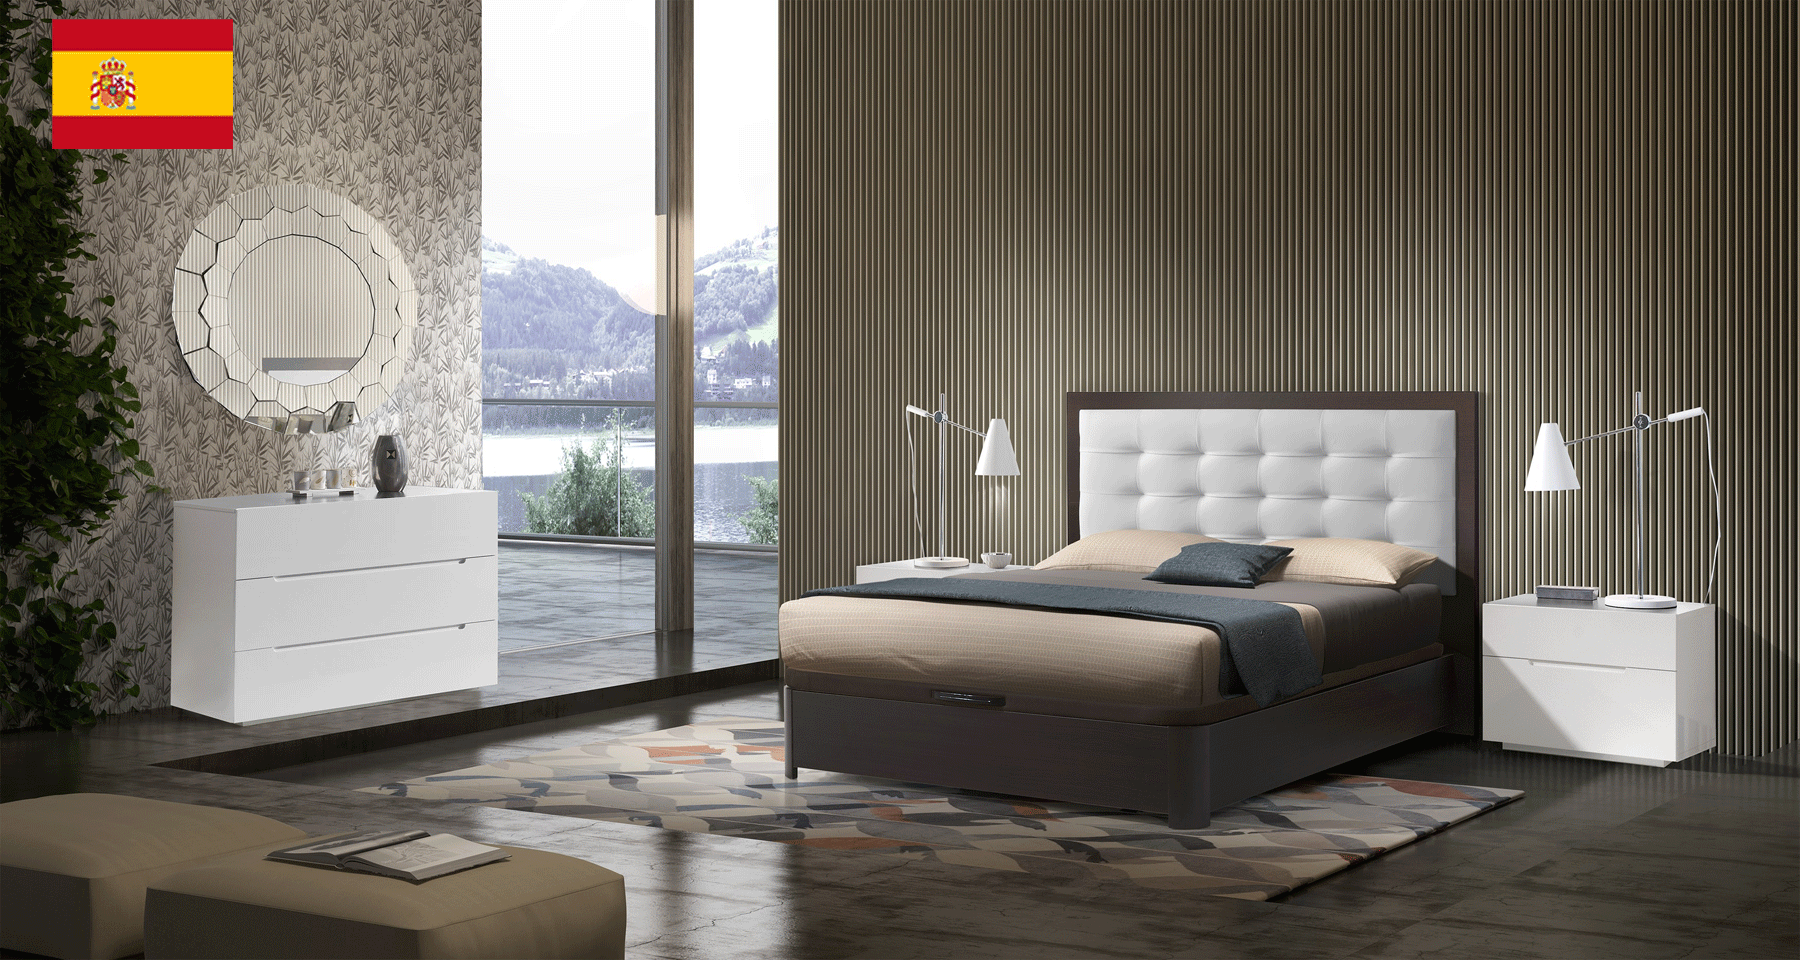 Bedroom Furniture Mattresses, Wooden Frames Regina Bedroom QS with Storage and M100, C100, E100 cases